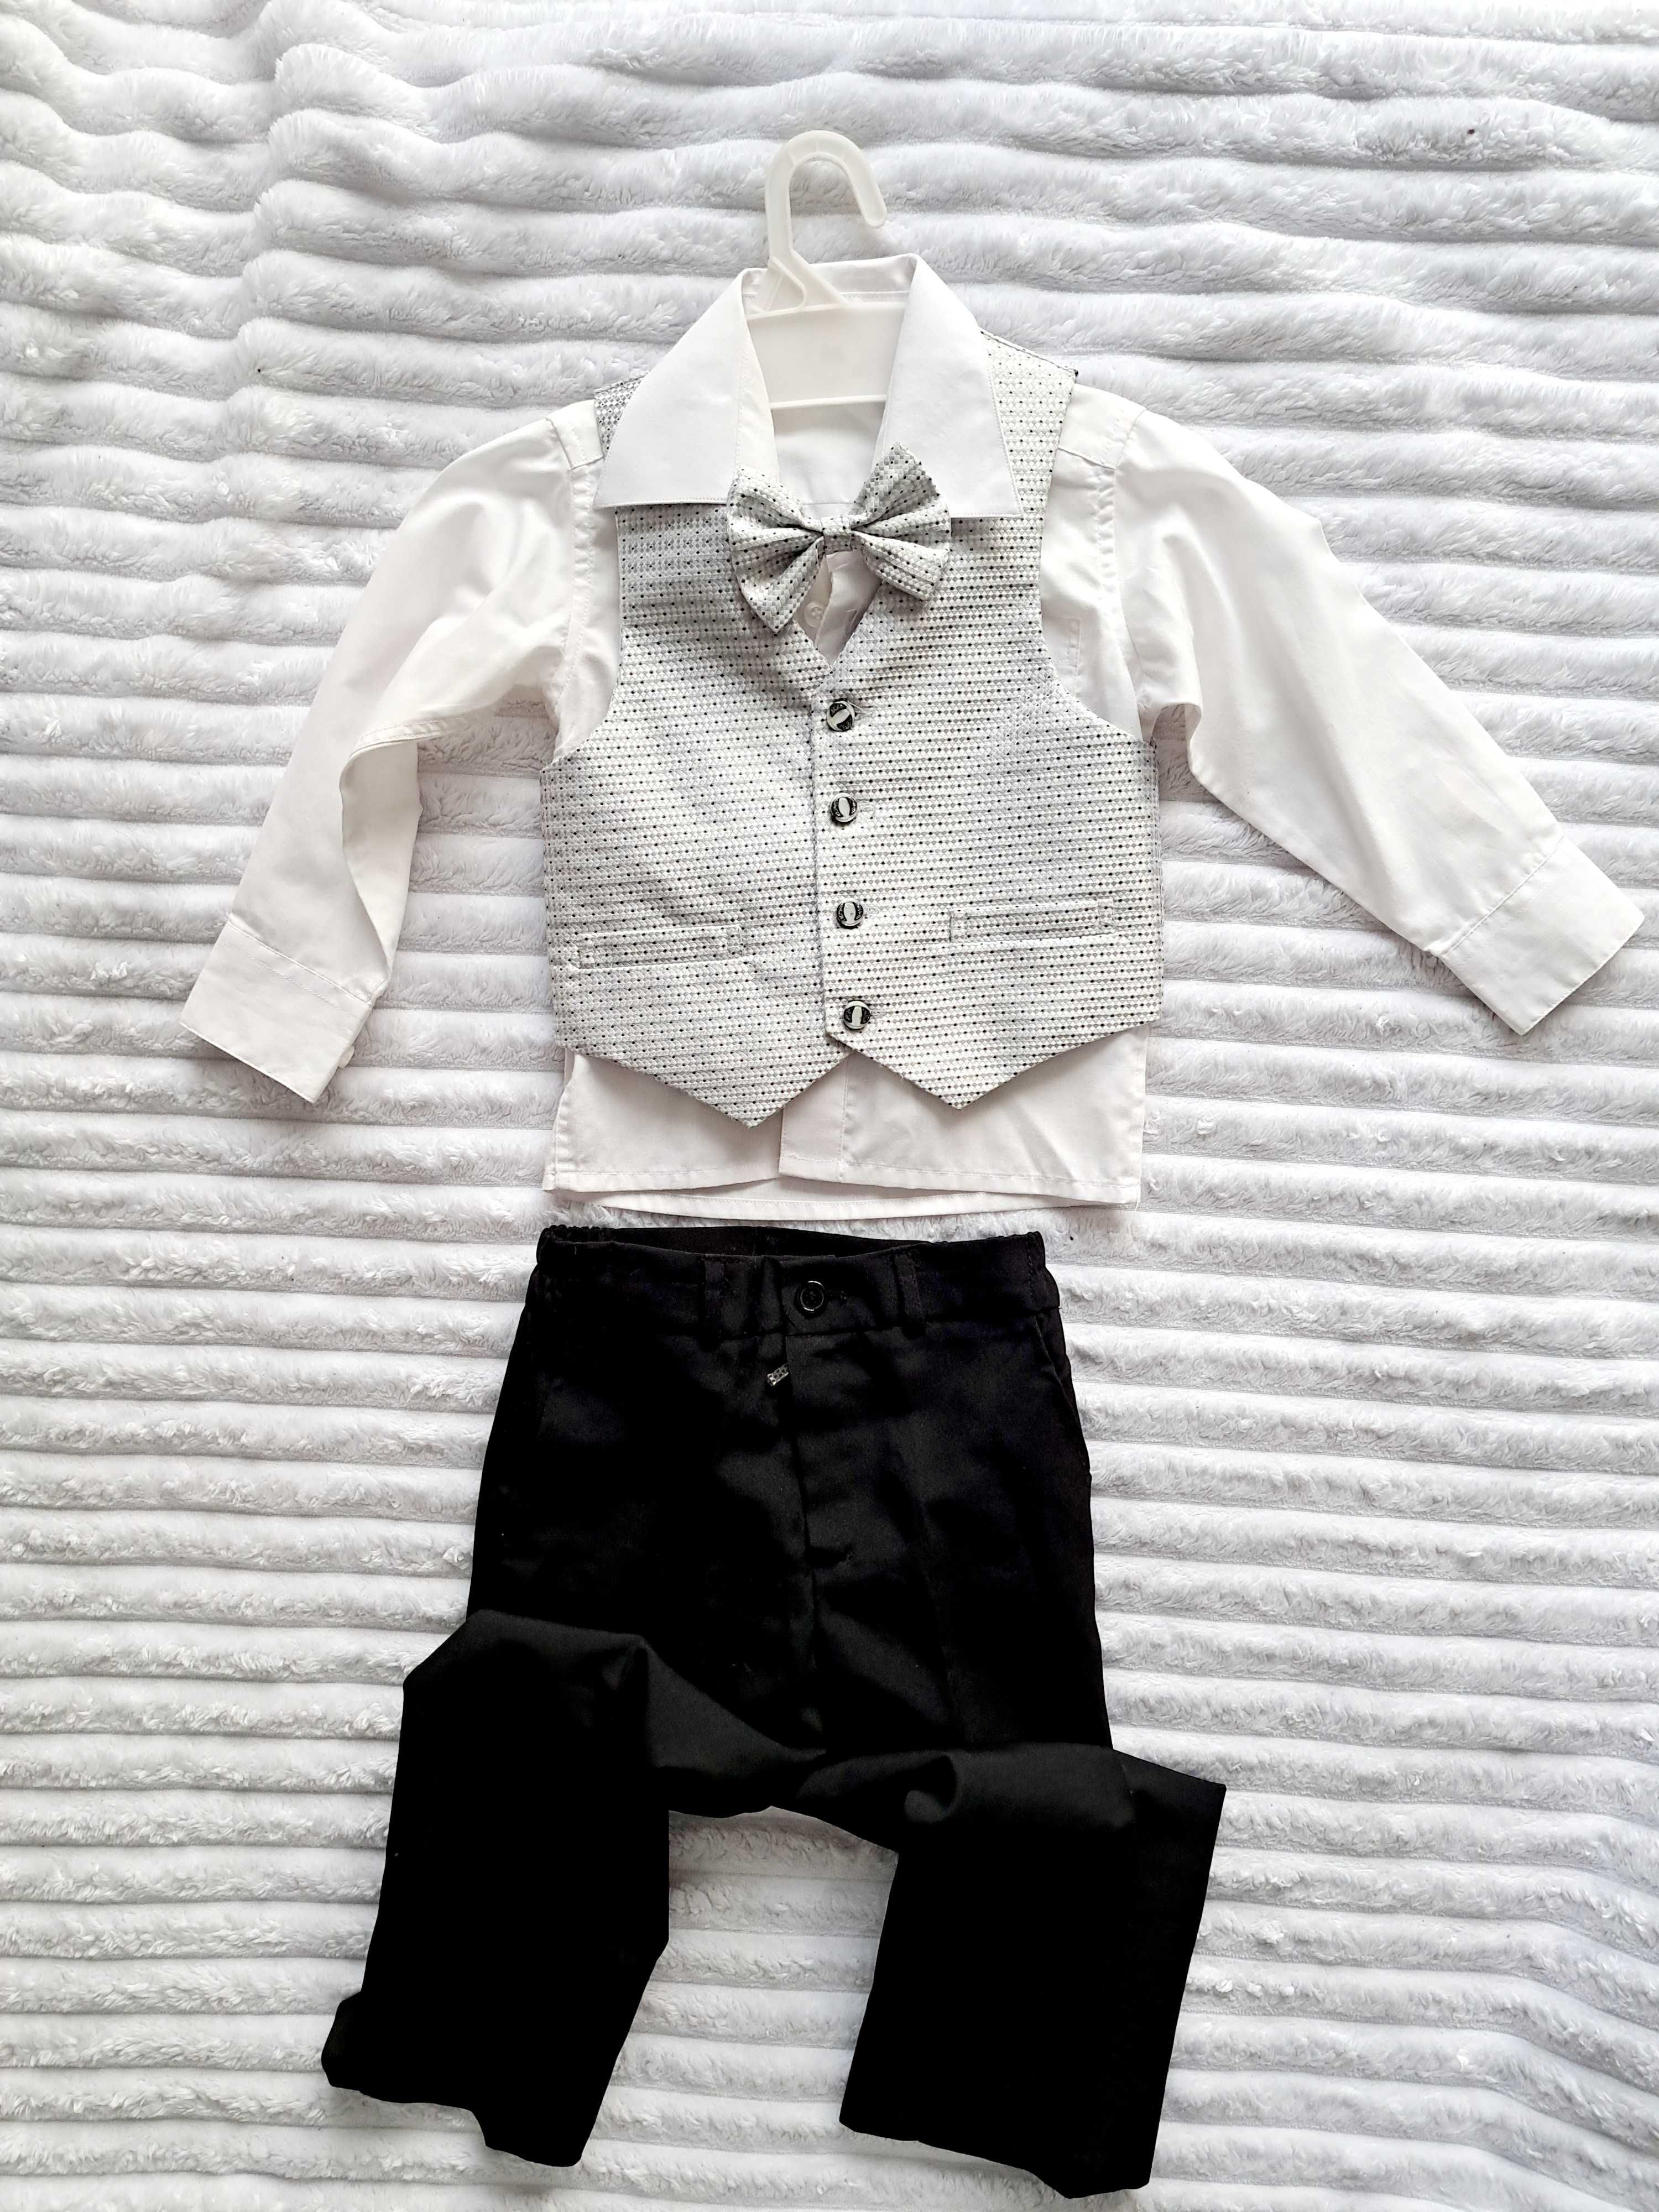 Костюм-тройка мальчику на 1-3 года рубашка,жилетка,брюки,бабочка